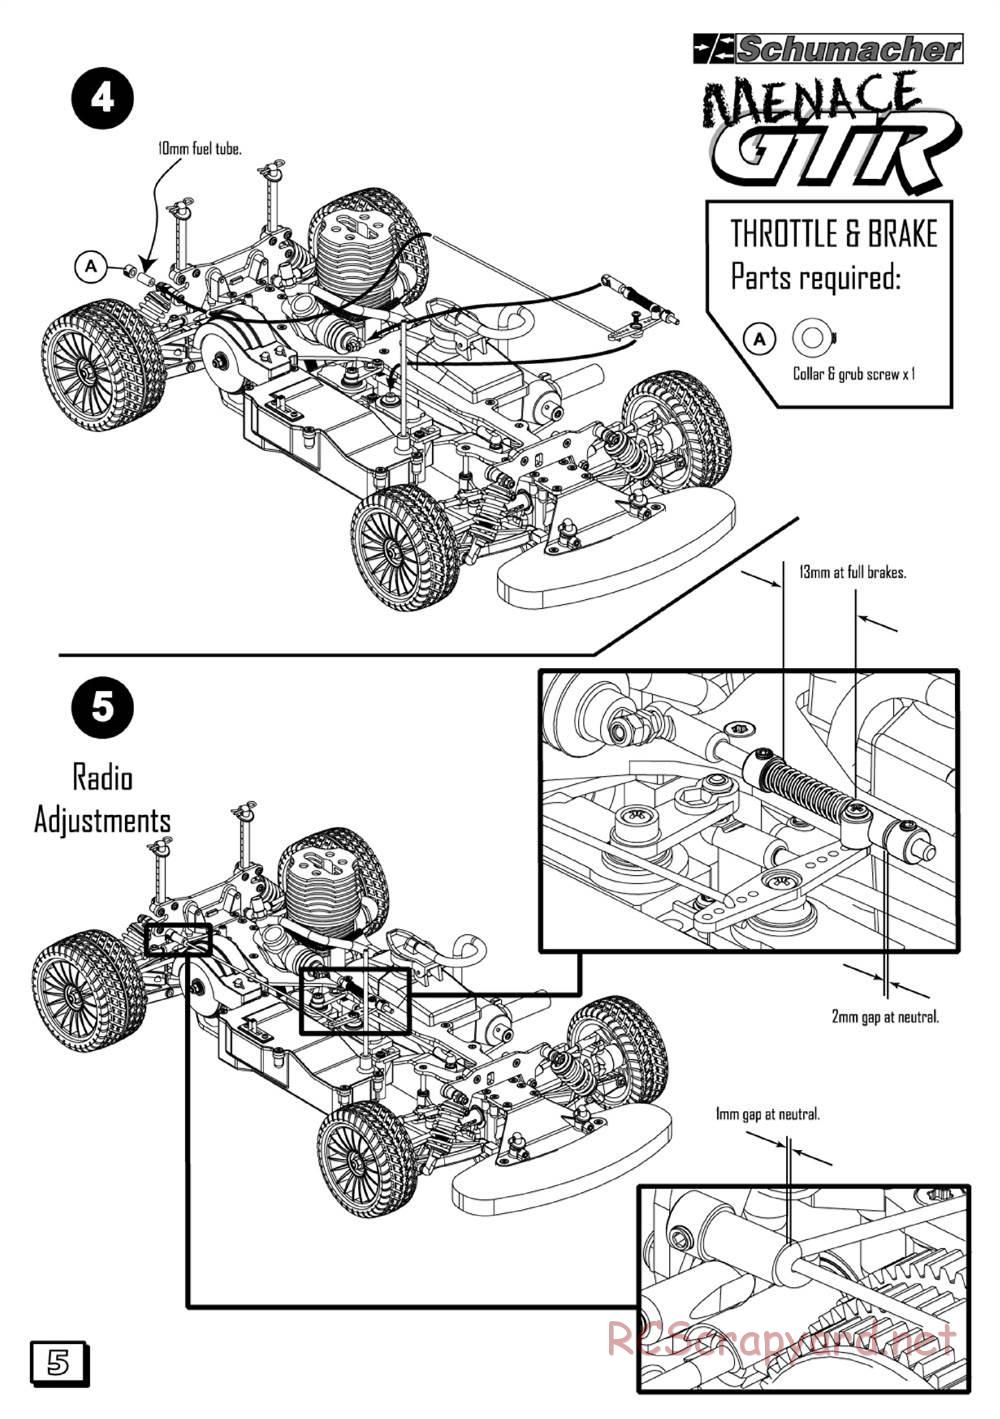 Schumacher - Menace GTR - Manual - Page 7